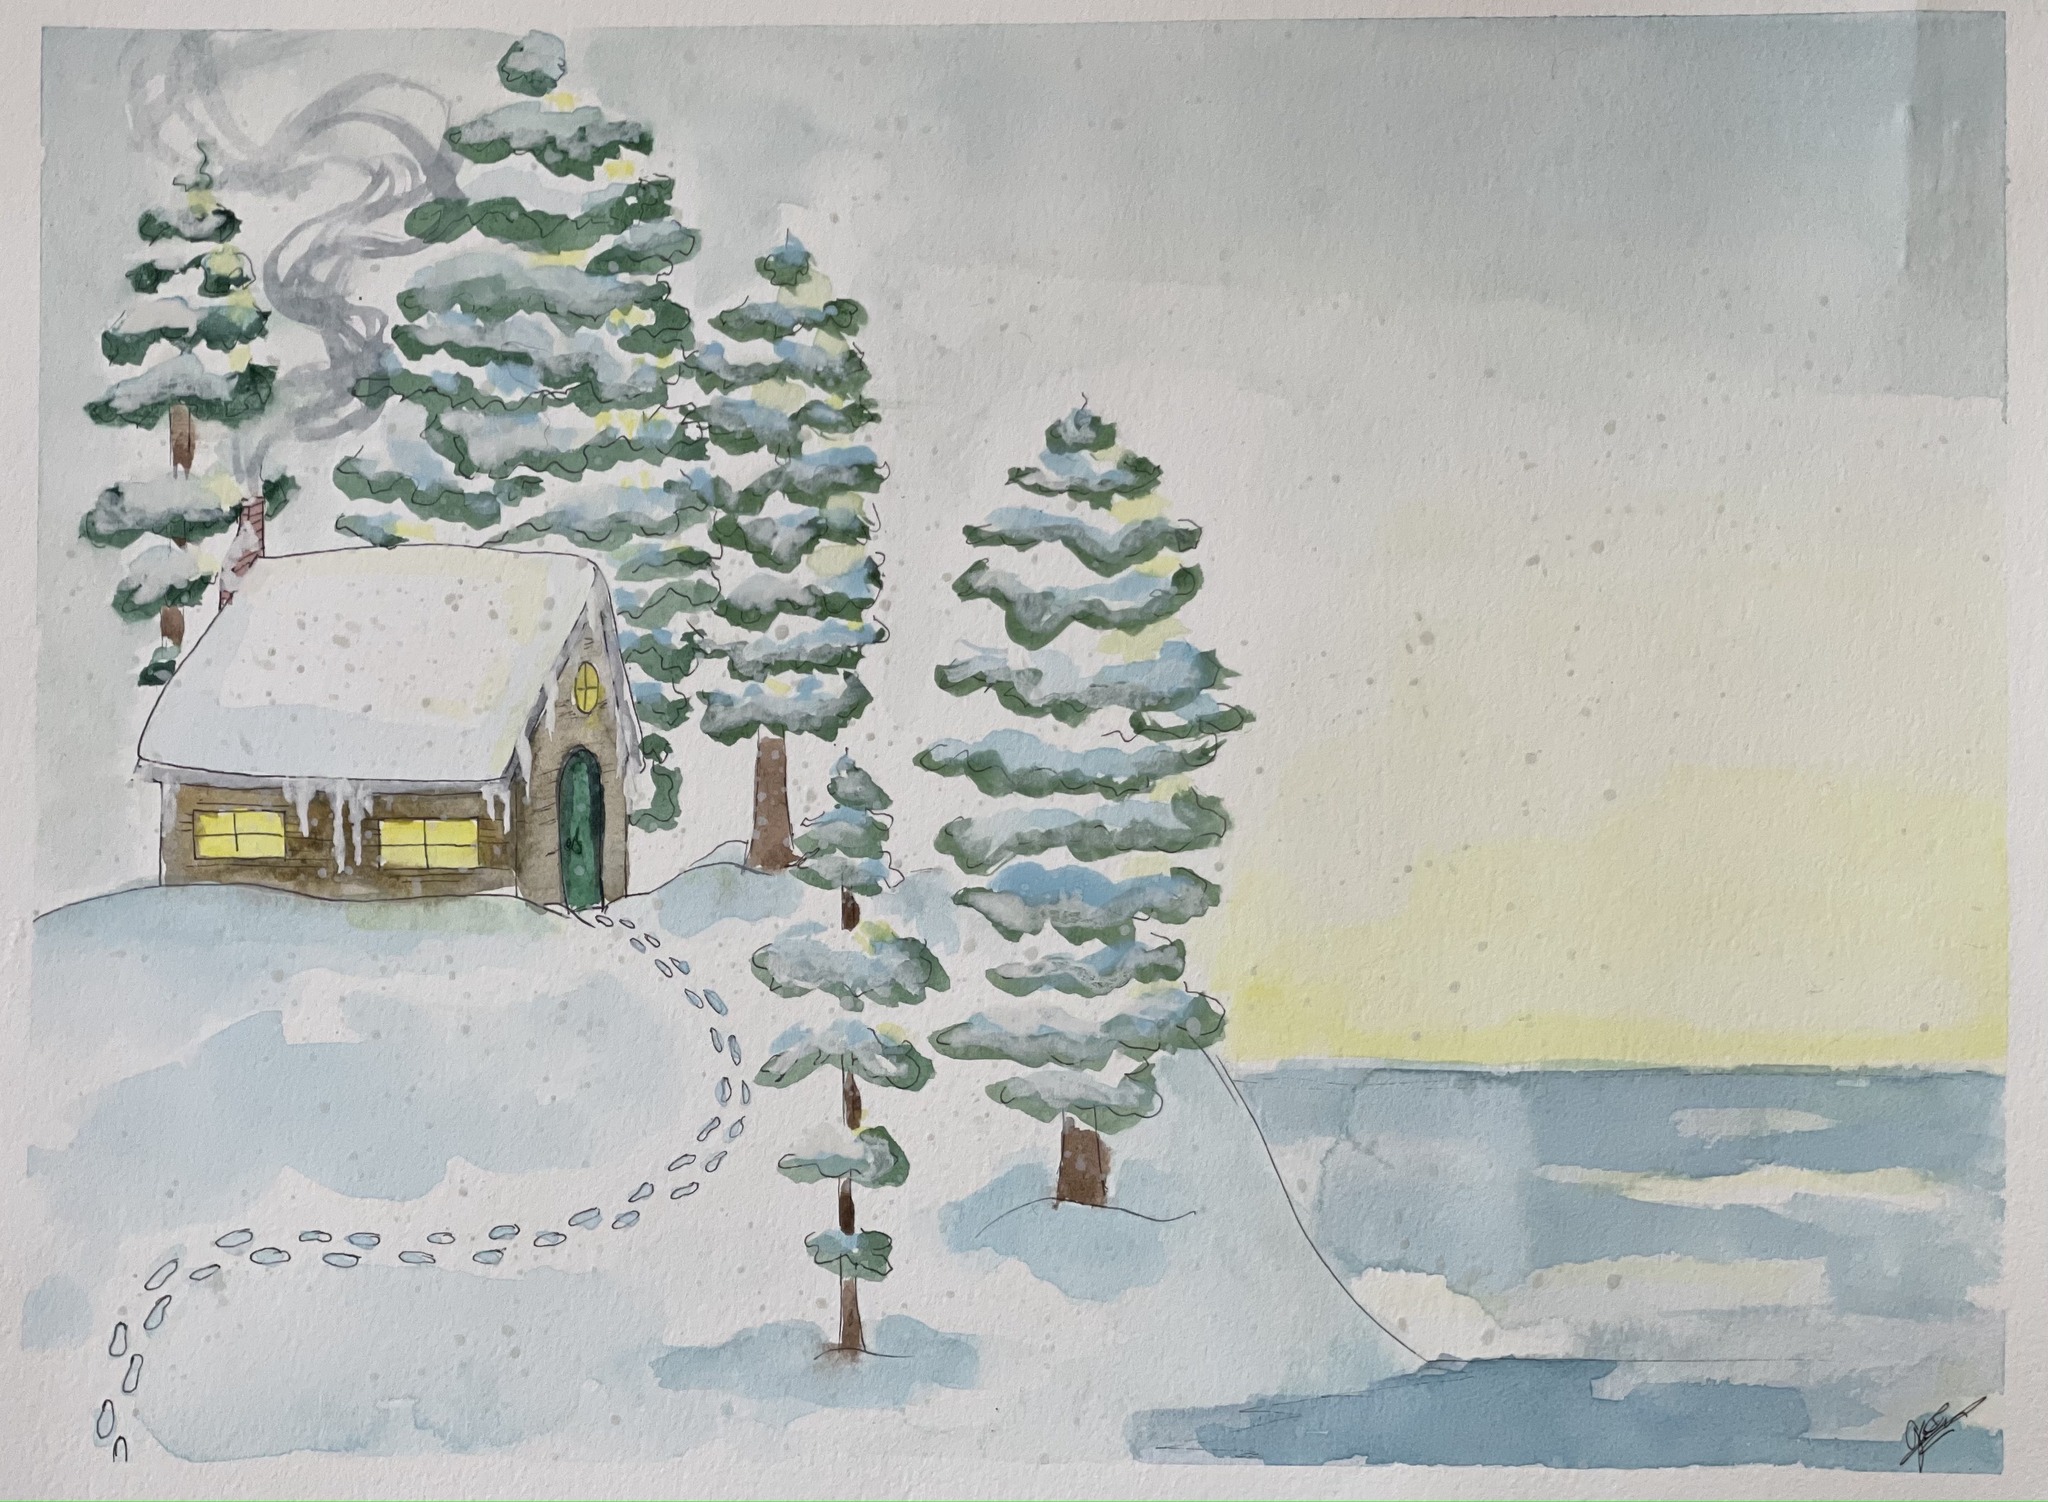 illustration of snowy landscape